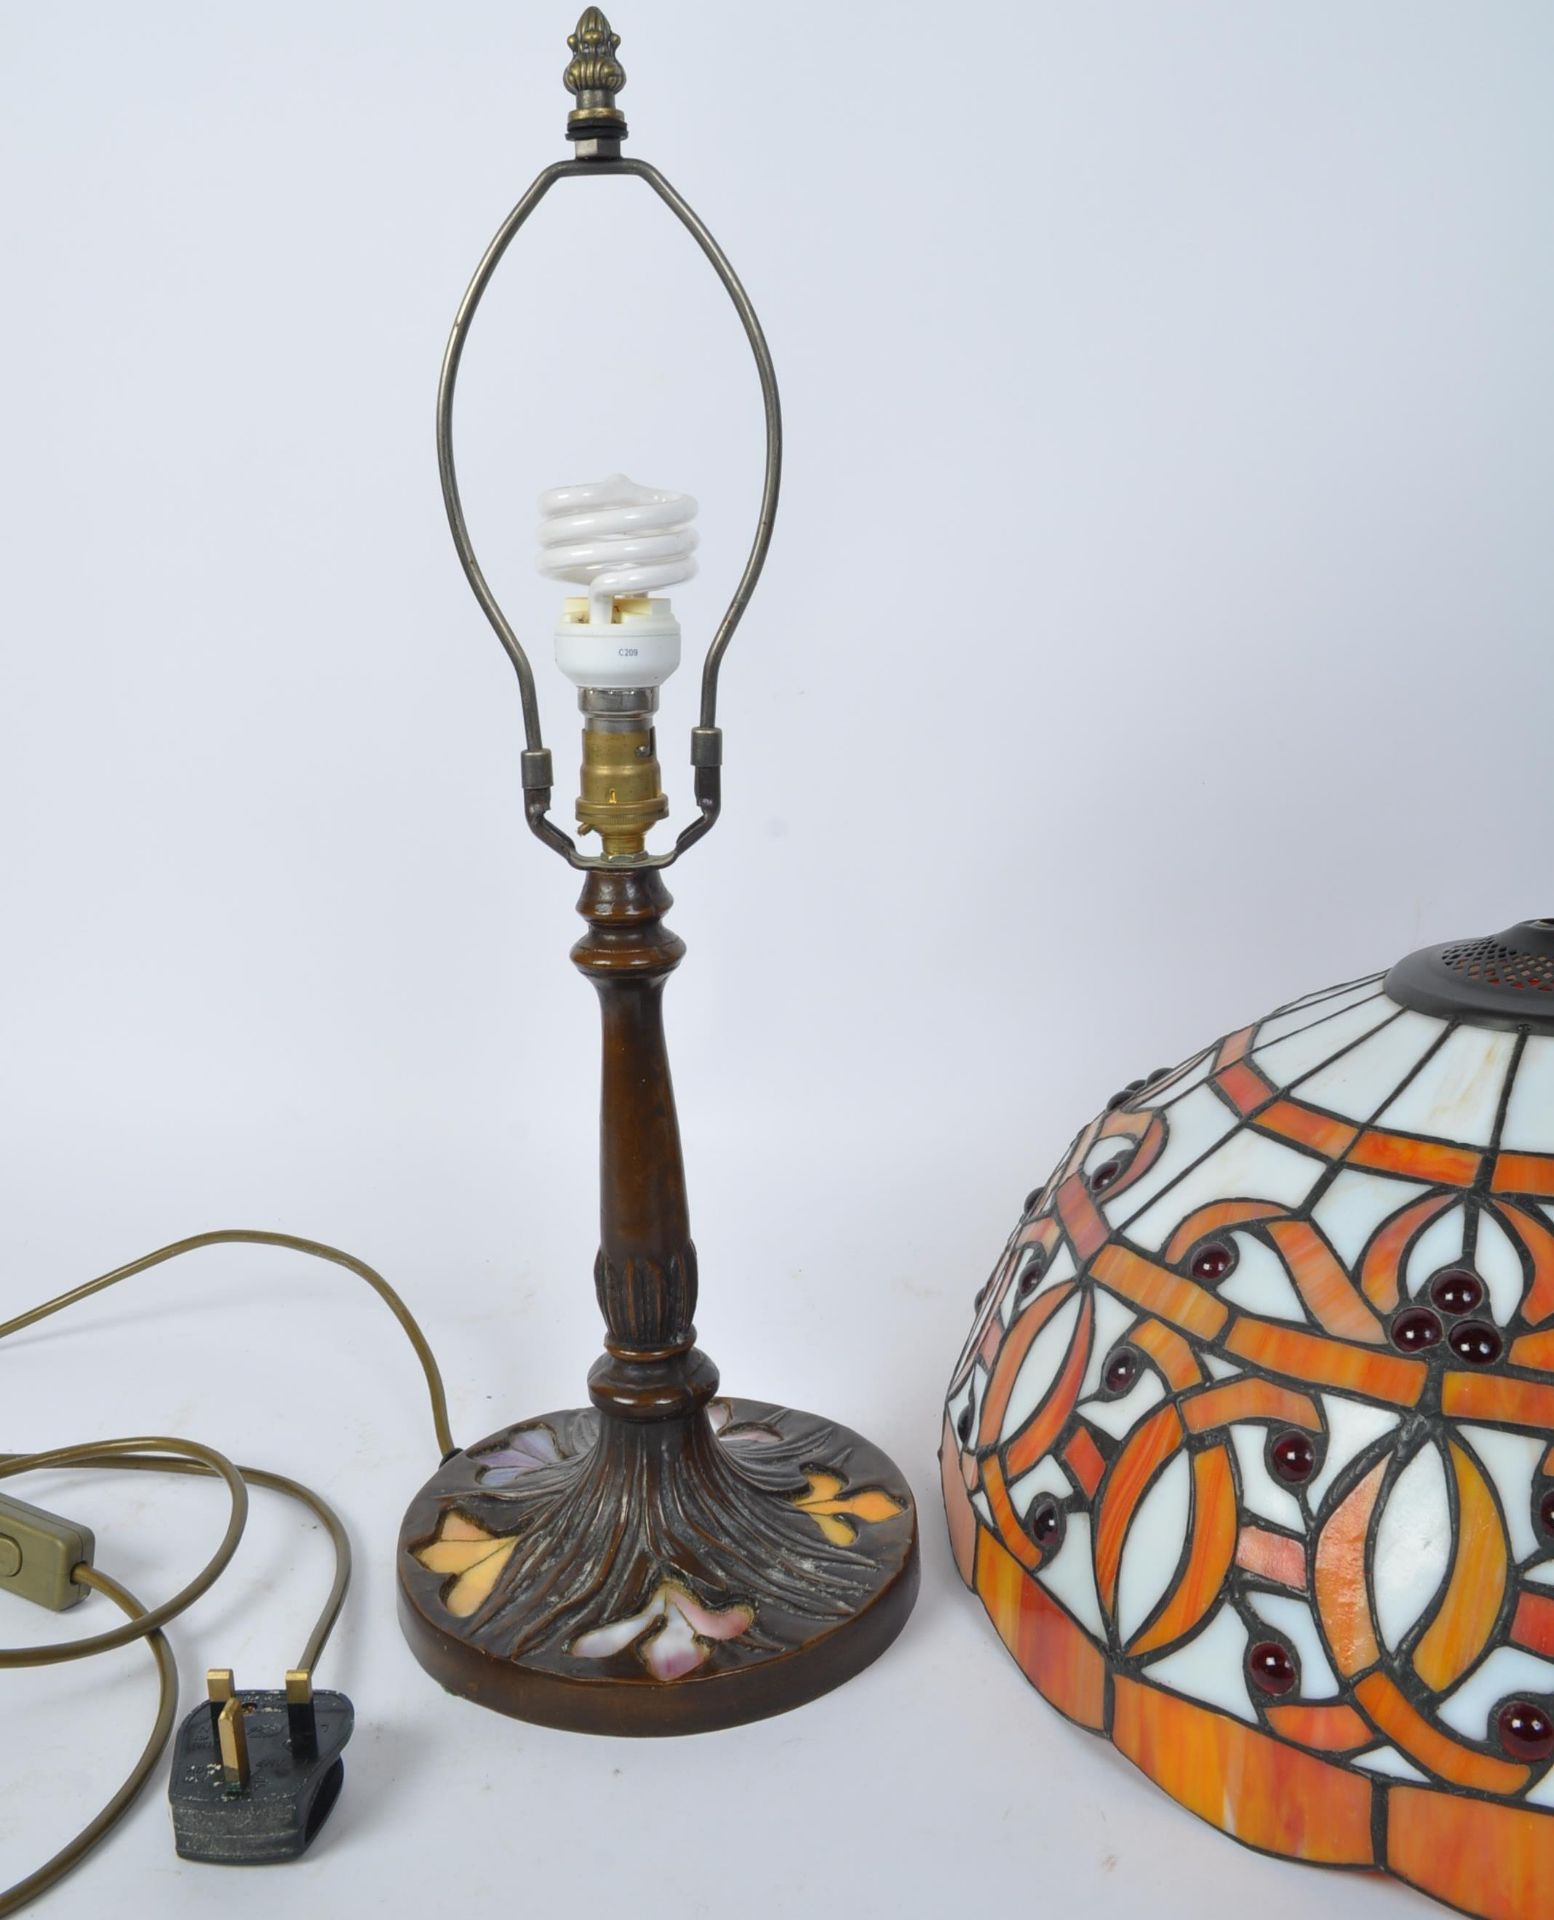 LARGE TIFFANY ART NOUVEAU STYLE TABLE LAMP - Image 7 of 7